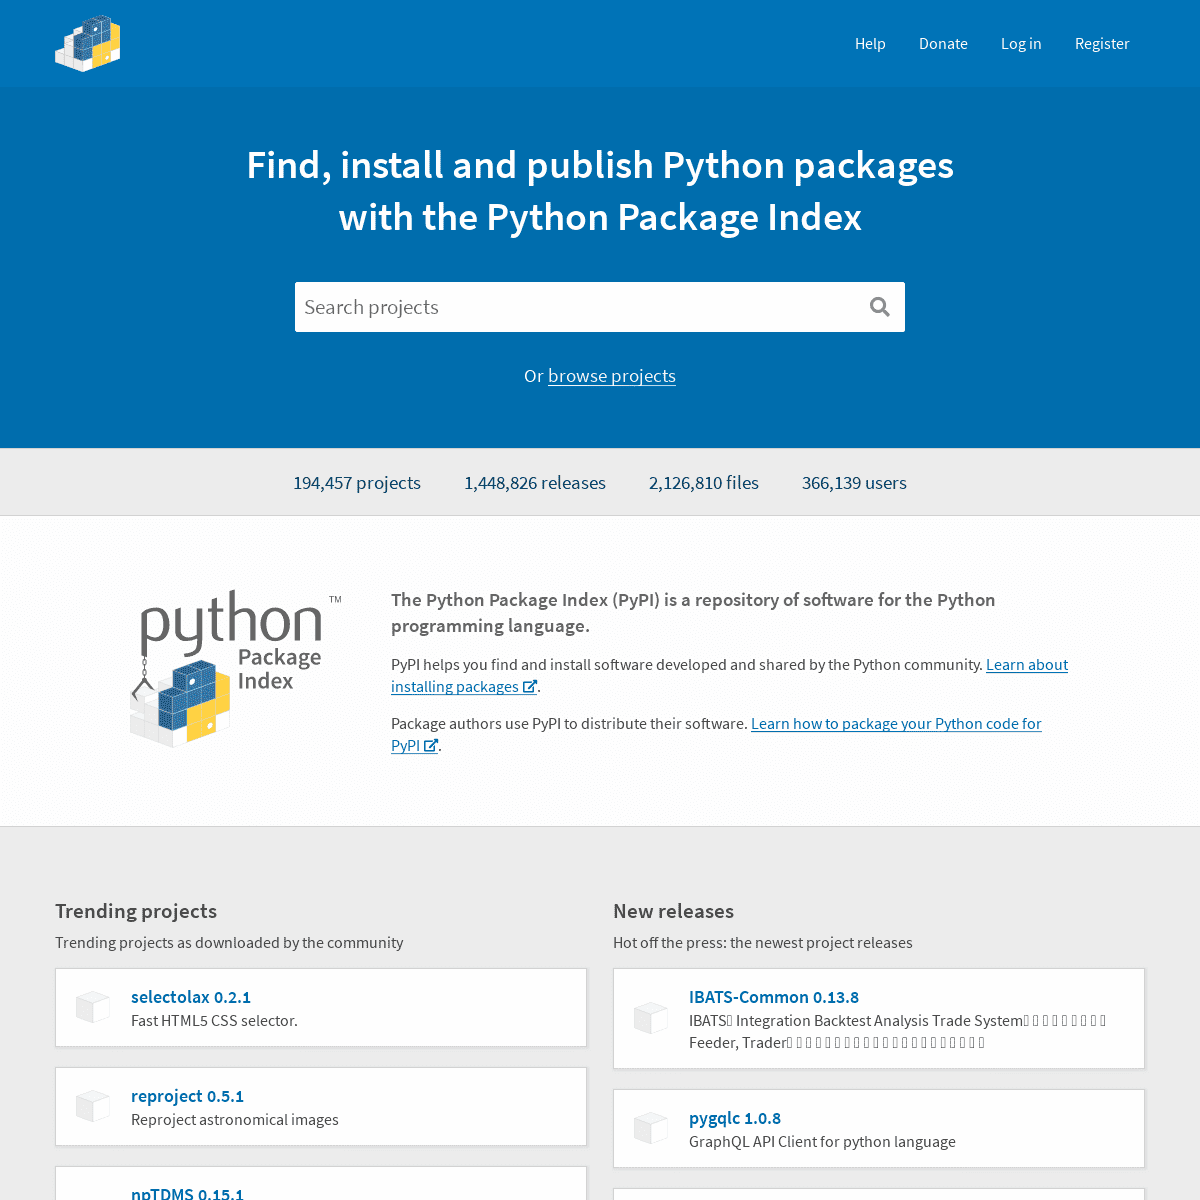 PyPI · The Python Package Index